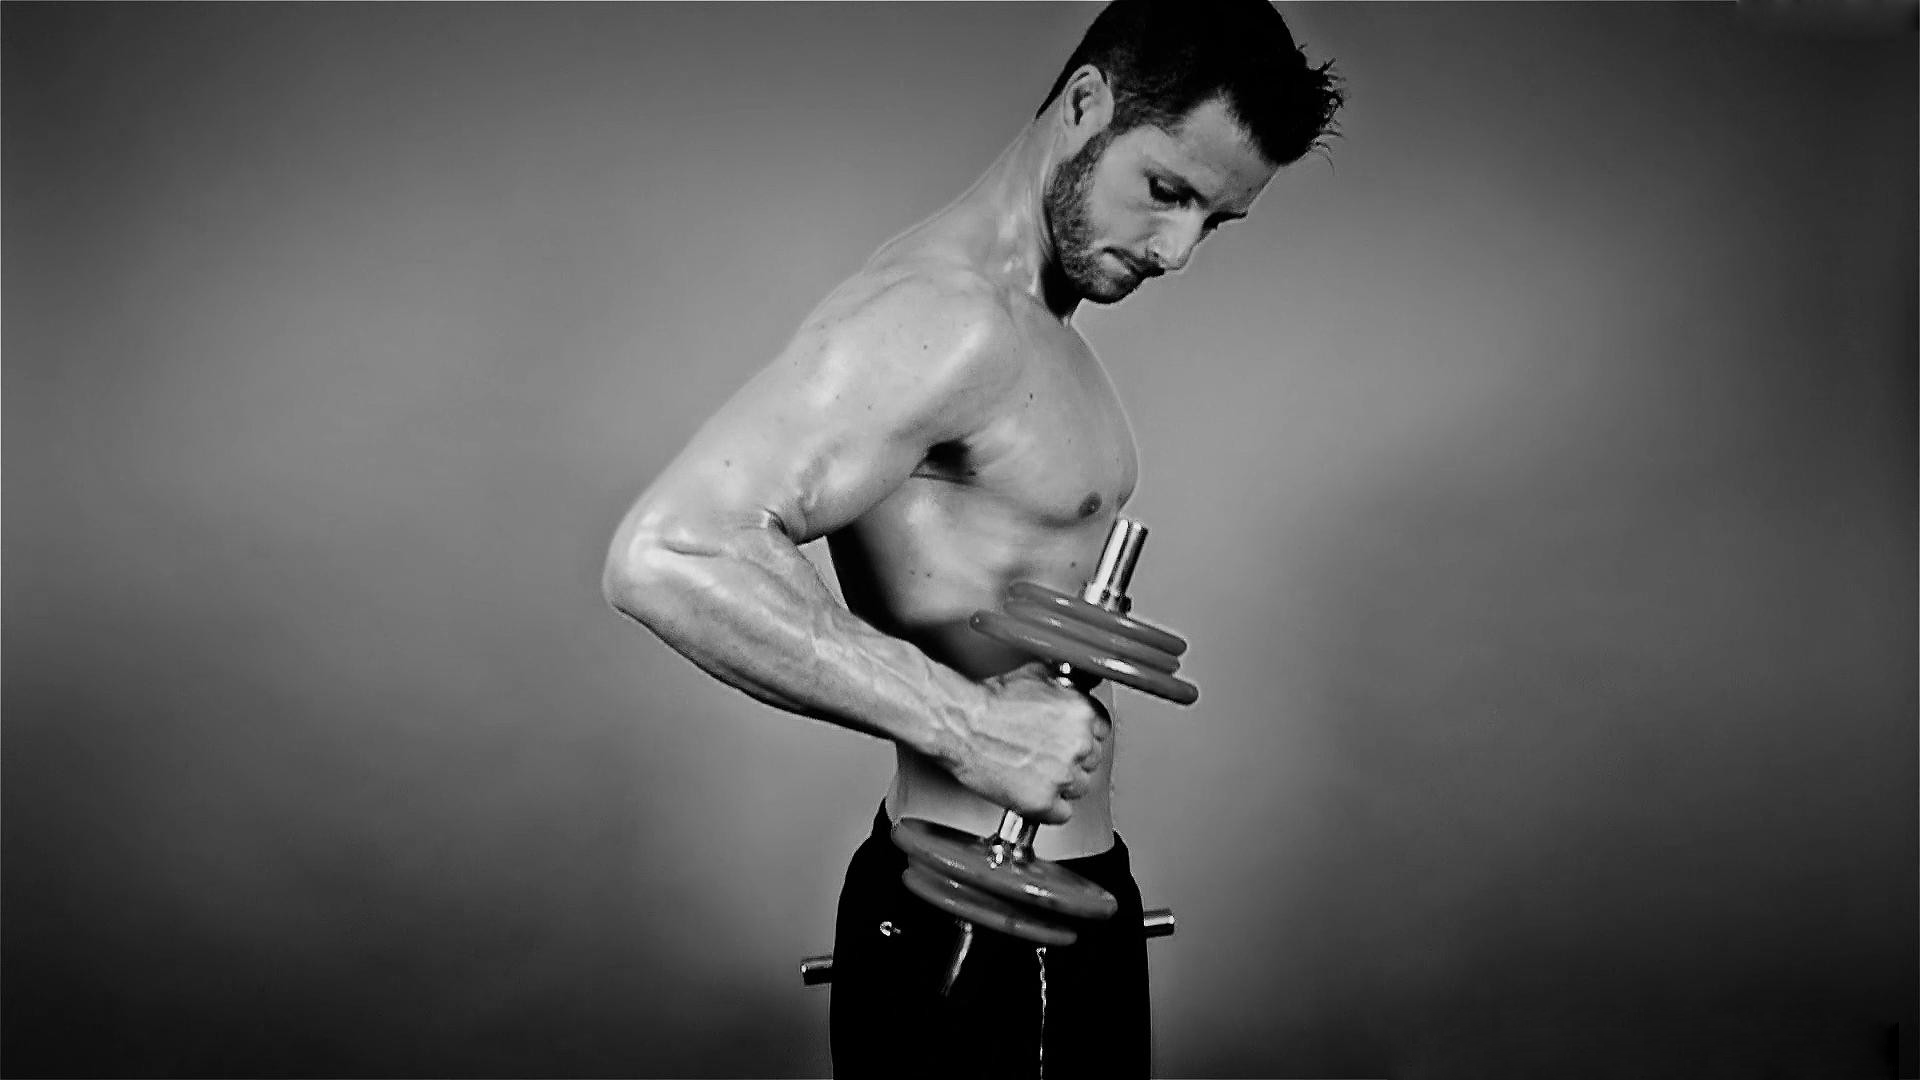 fitness wallpaper,ohne brust,stehen,truhe,abdomen,fotografie